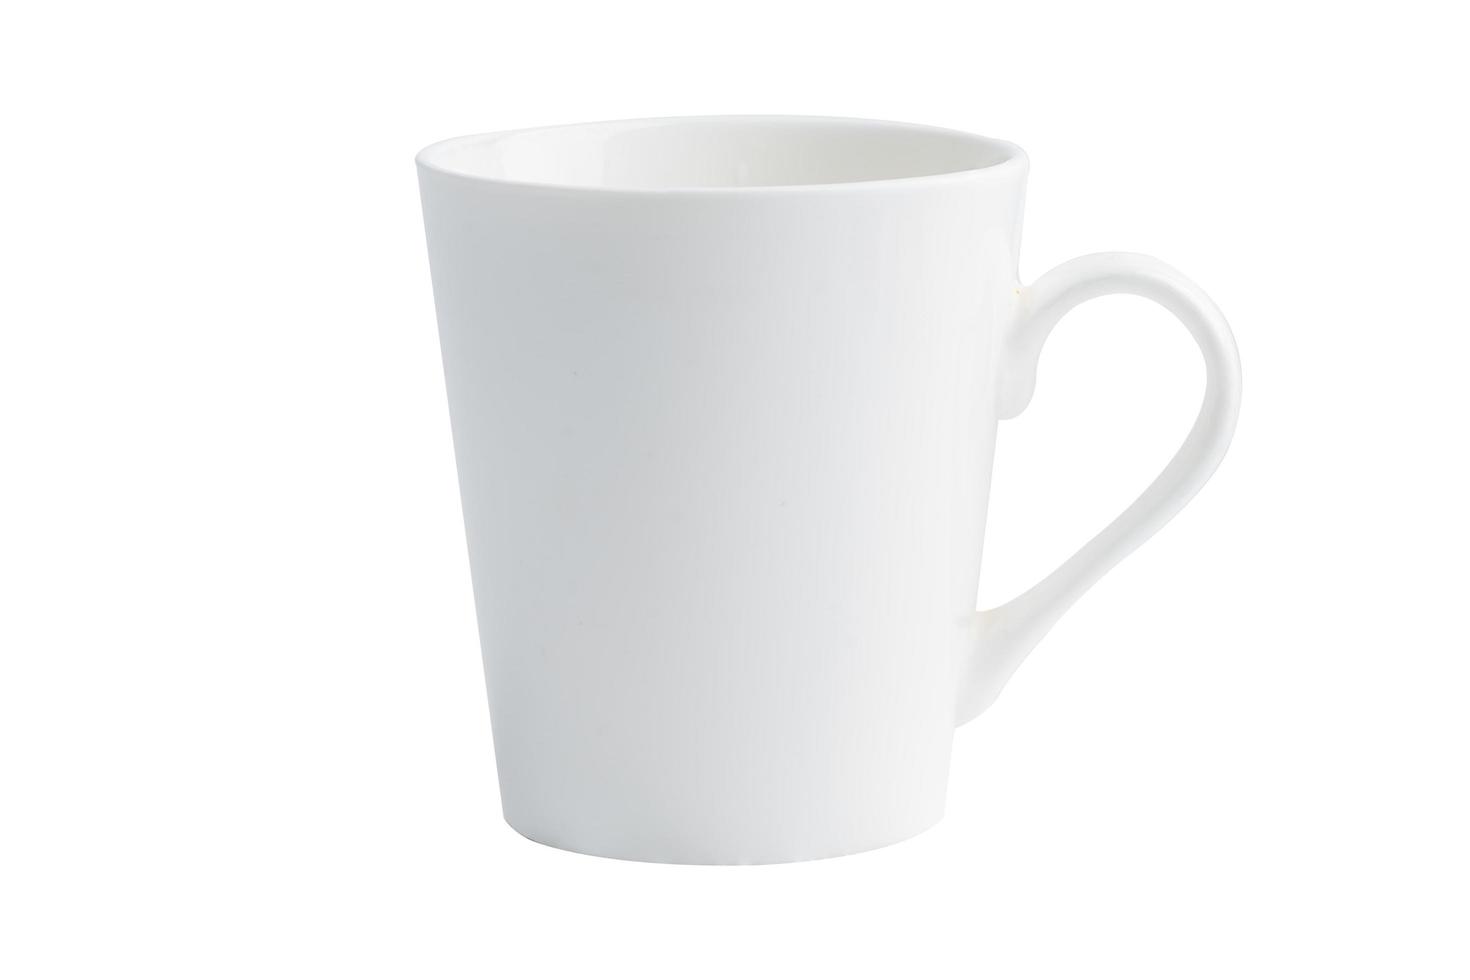 White mug glass for drink isolate on white background photo